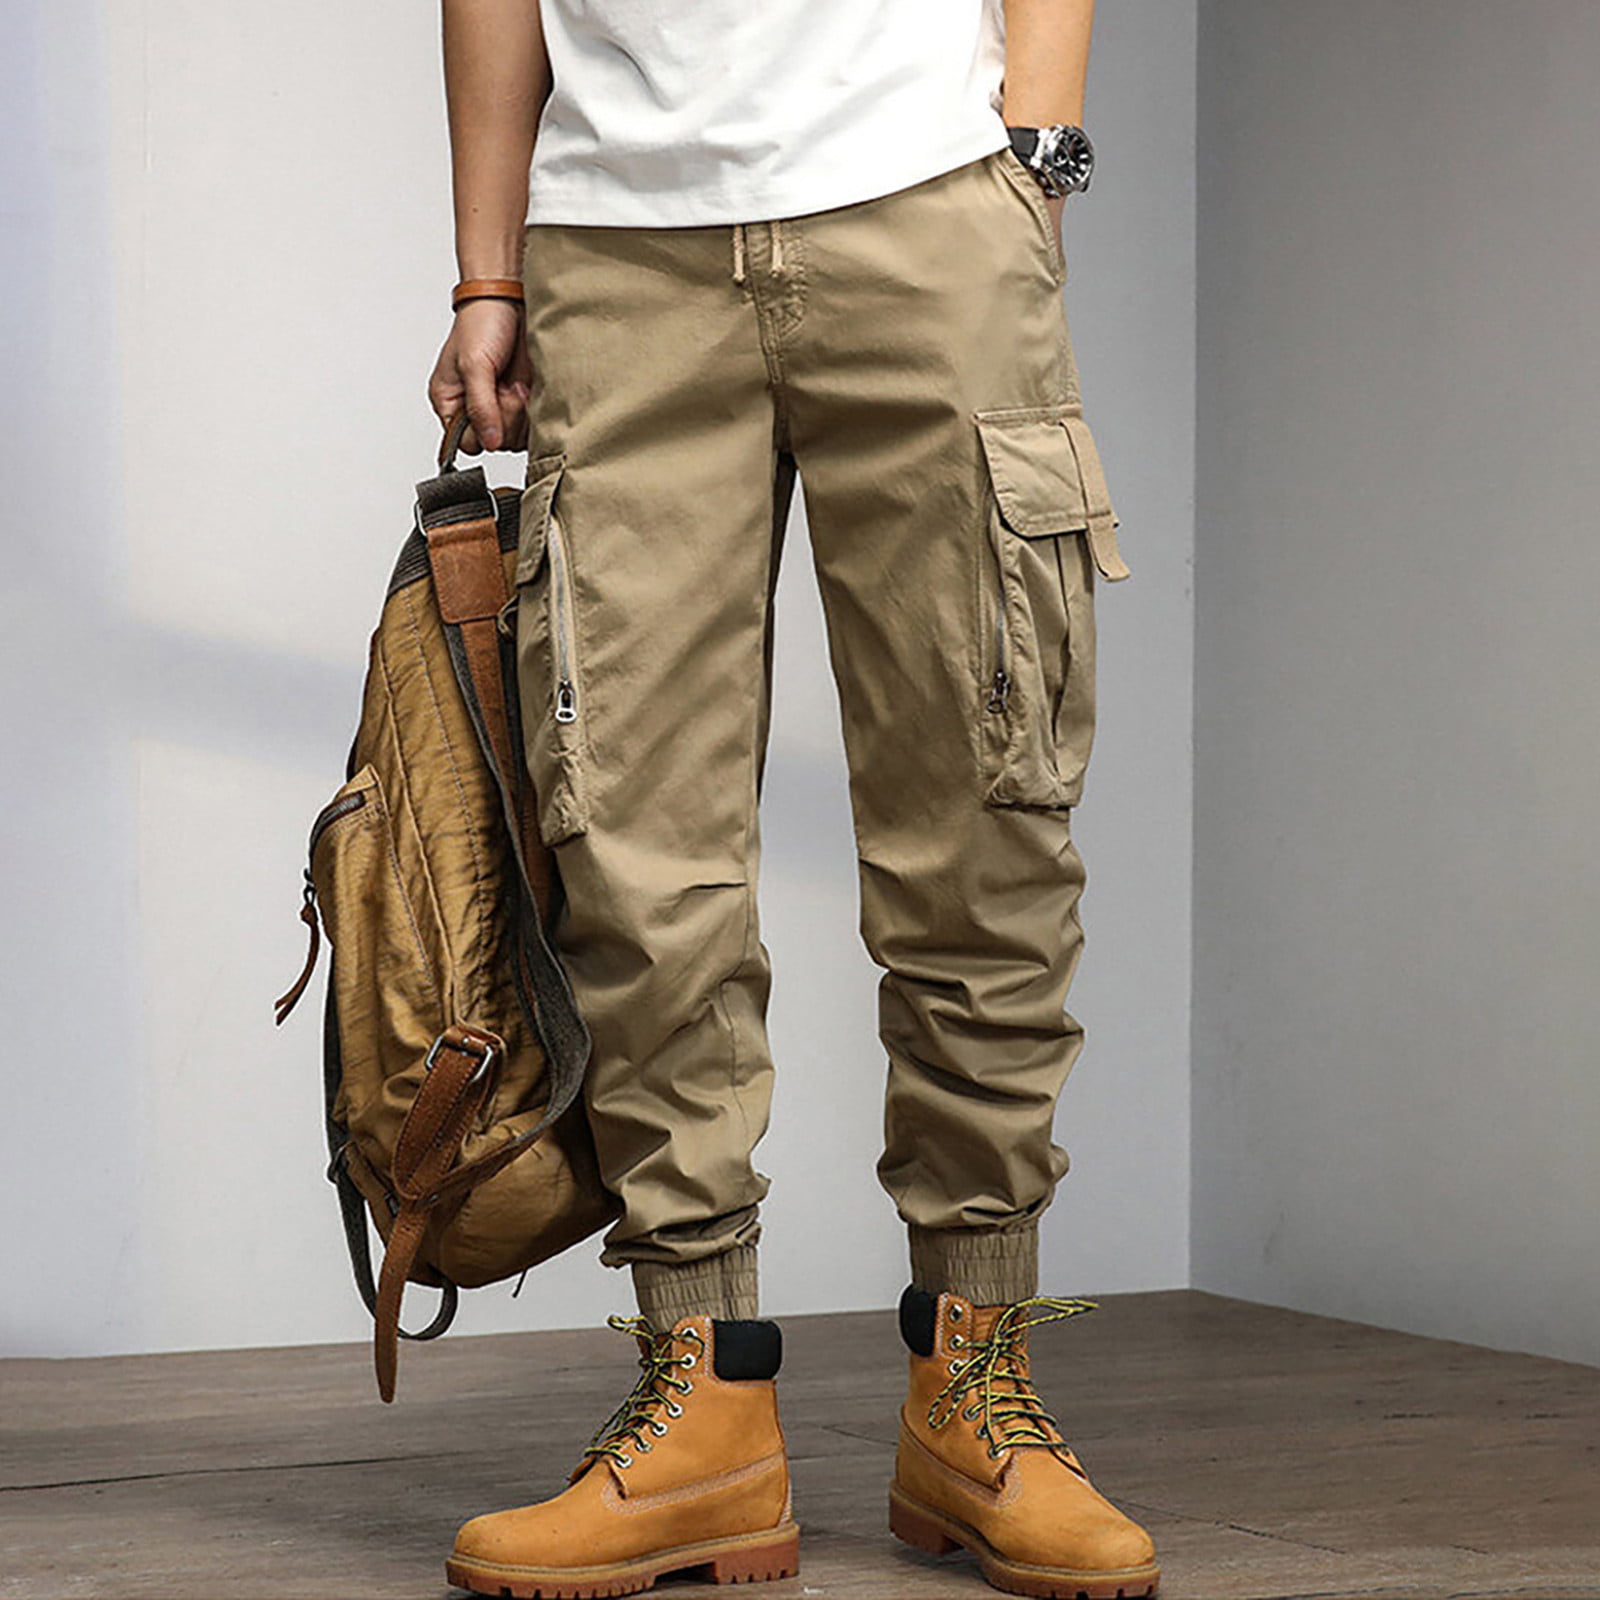 Jeans & Trousers | Khaki Colour Trouser From Bershka. | Freeup